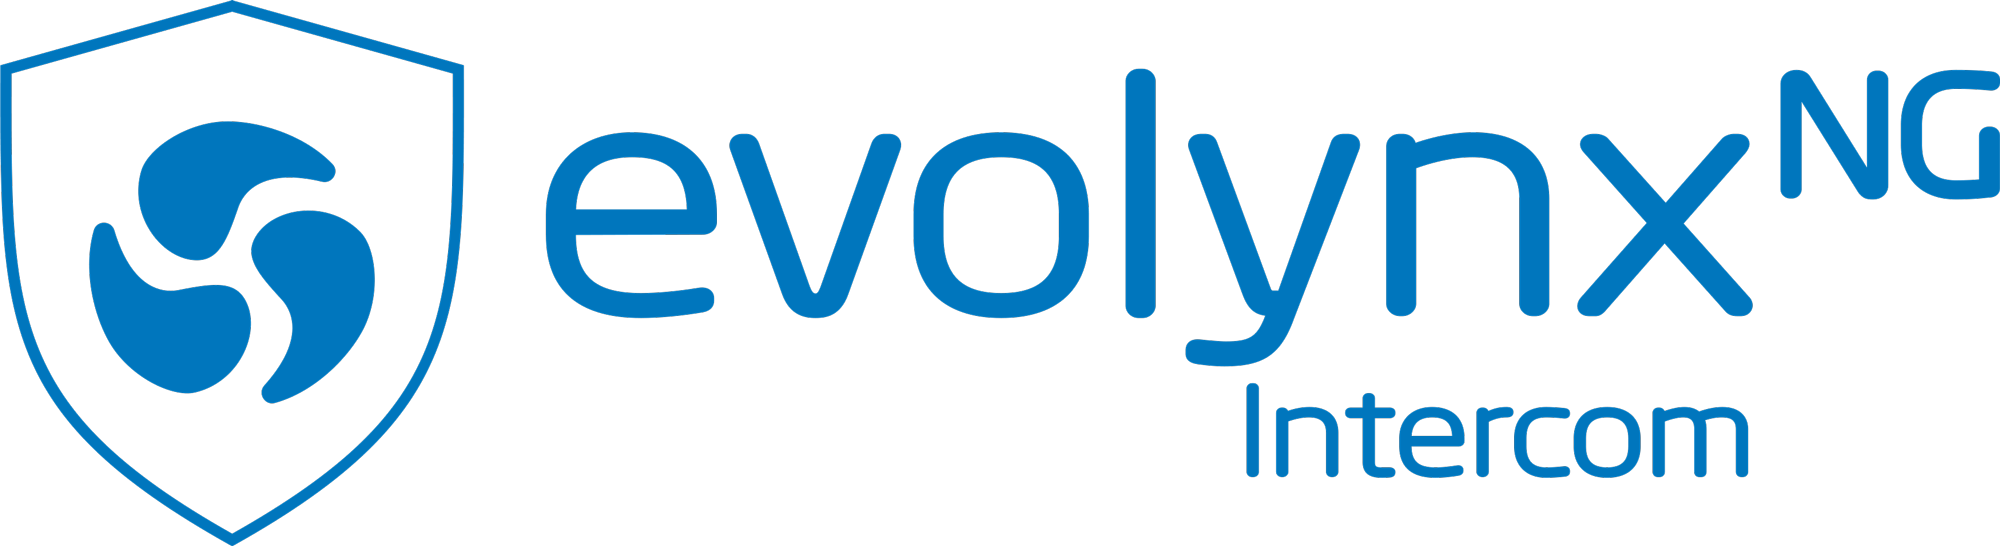 logo evolynxNG software intercom